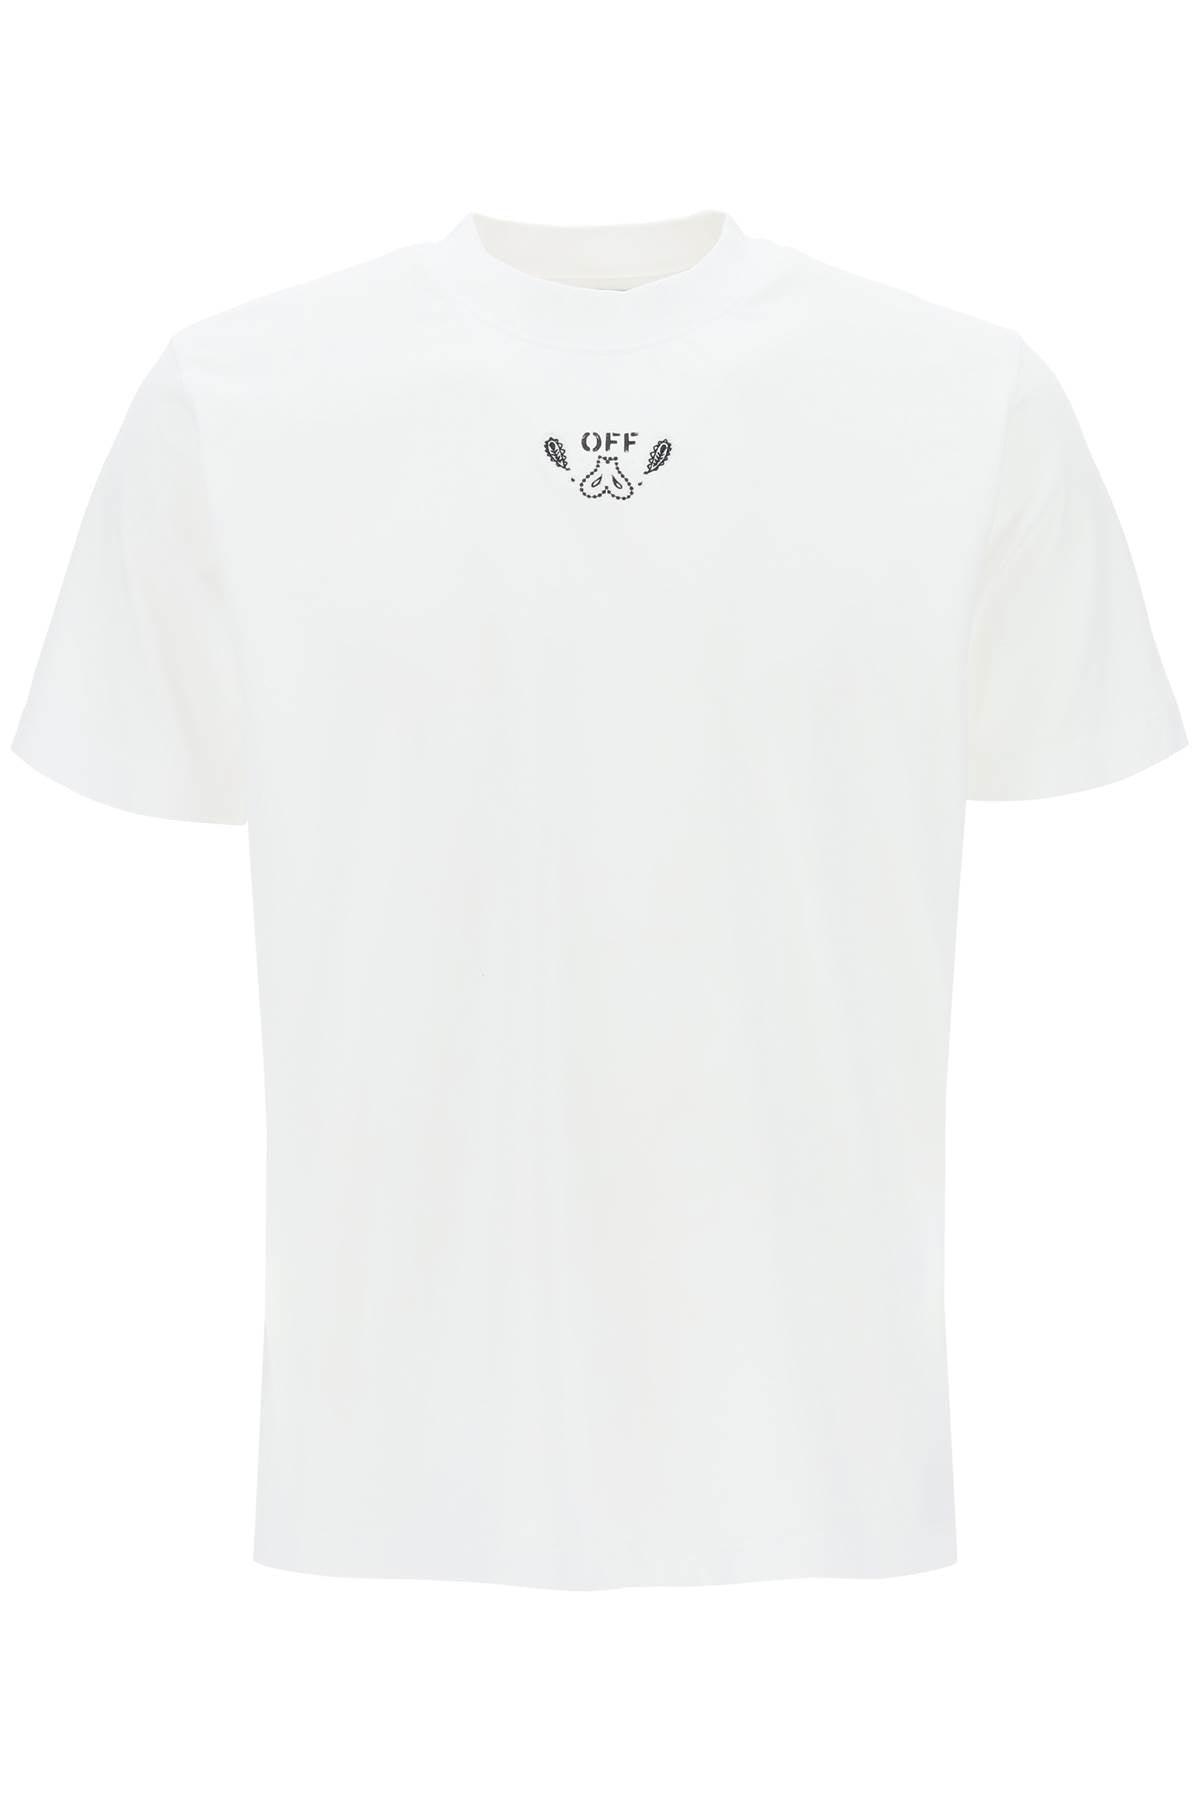 Off White Bandana Arrow Pattern T-Shirt - JOHN JULIA